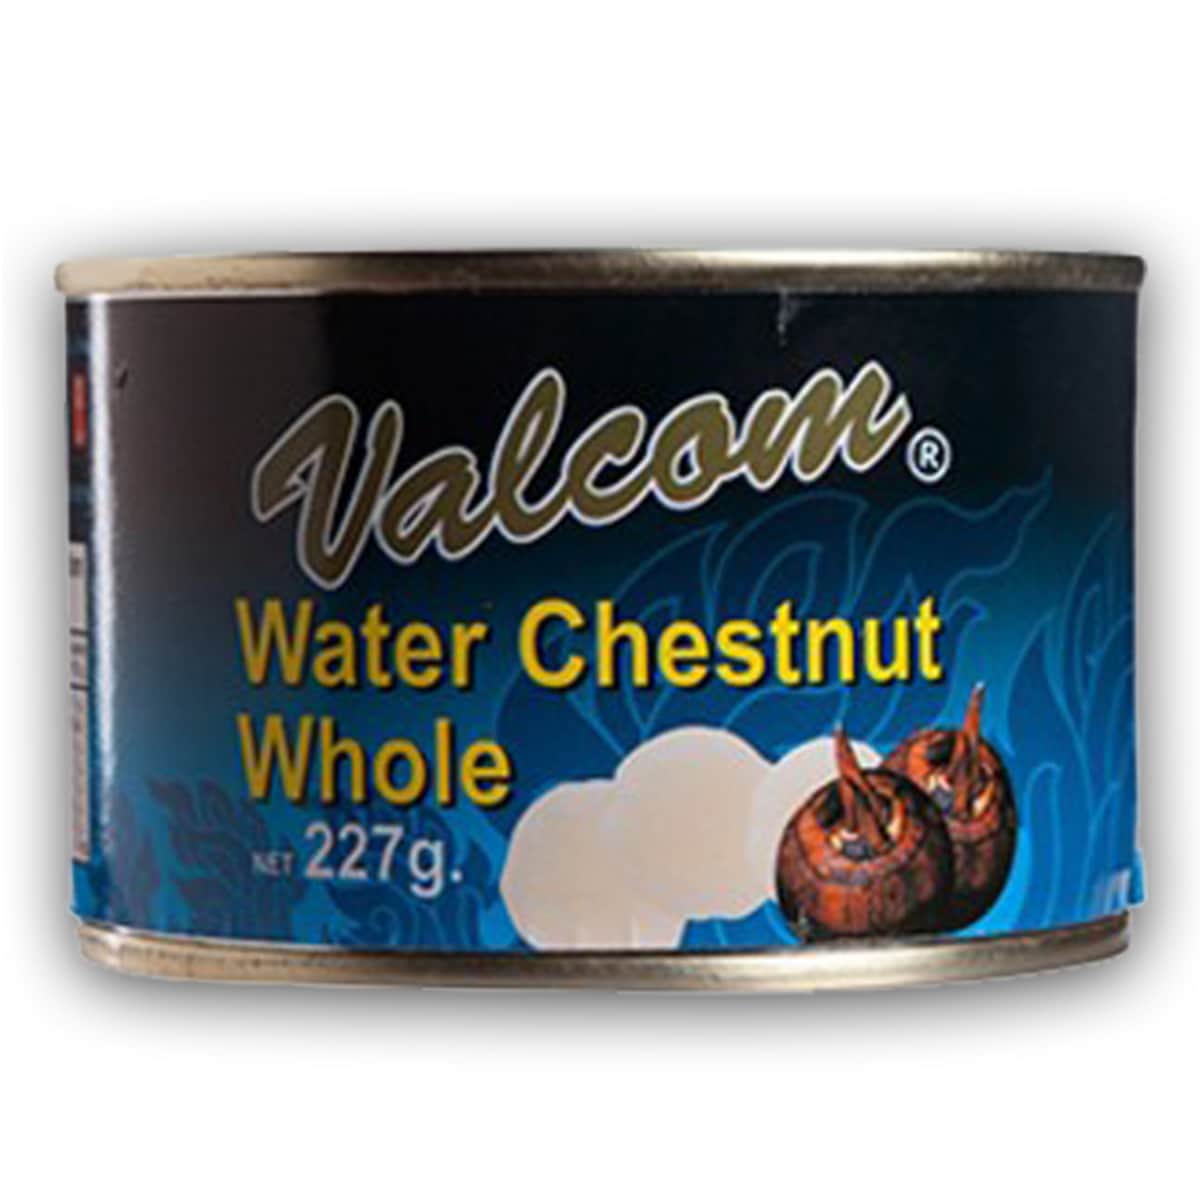 Buy Valcom Water Chestnut Whole - 227 gm